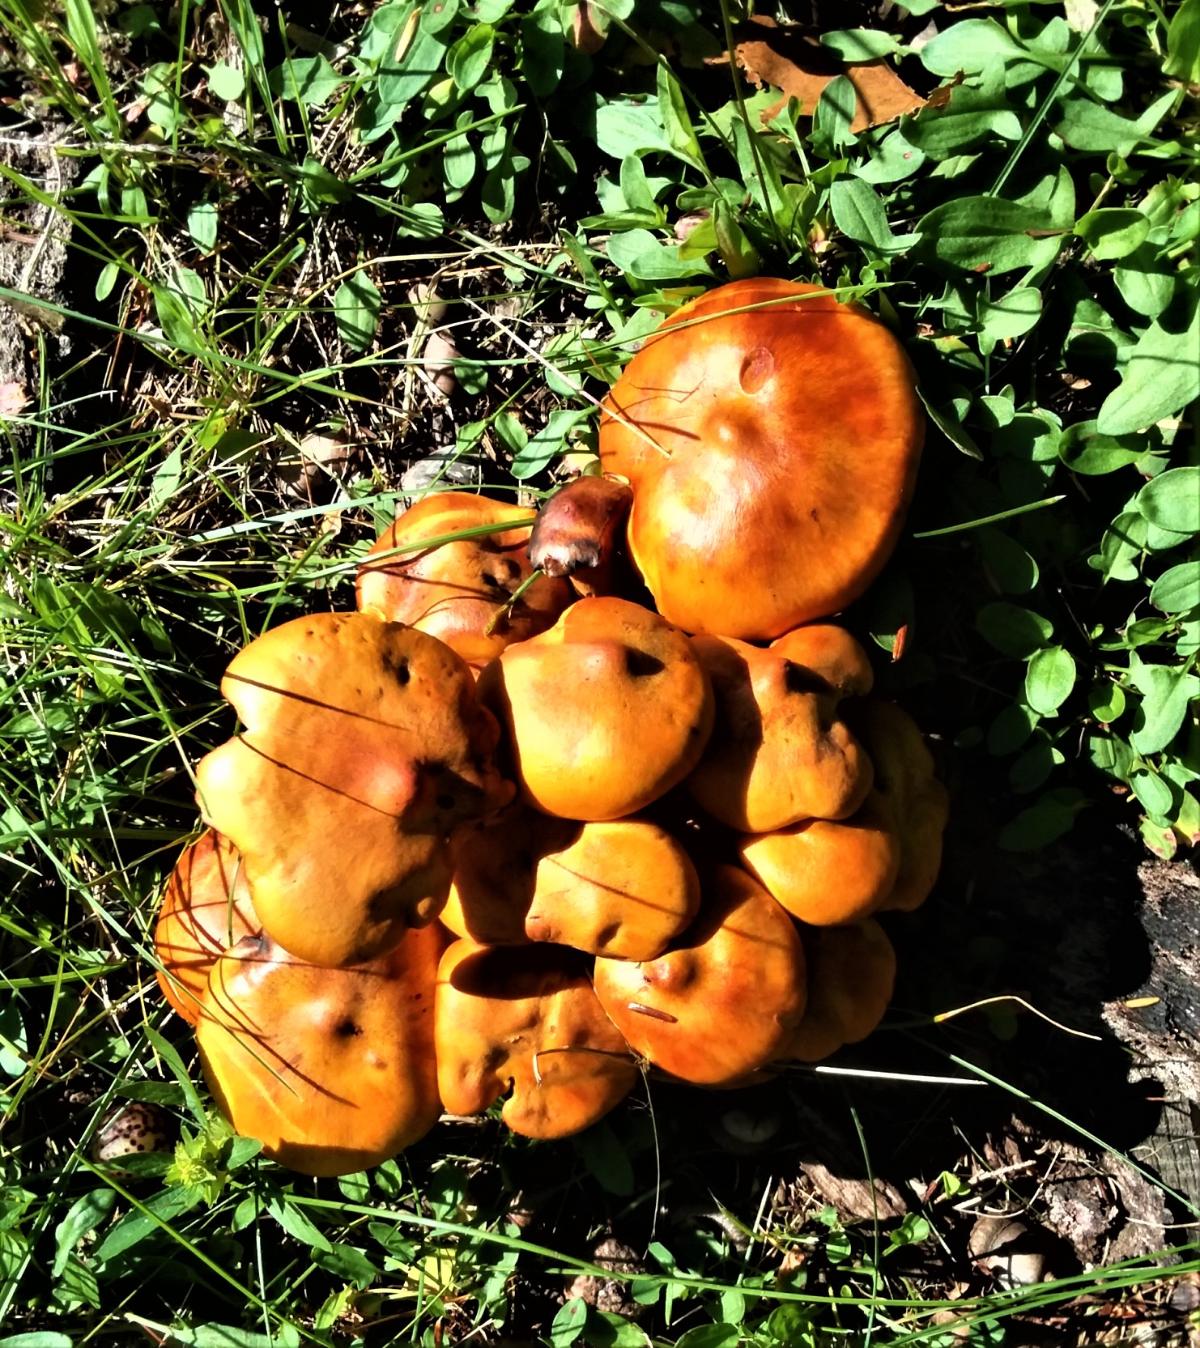 Clump of jack o lantern mushrooms